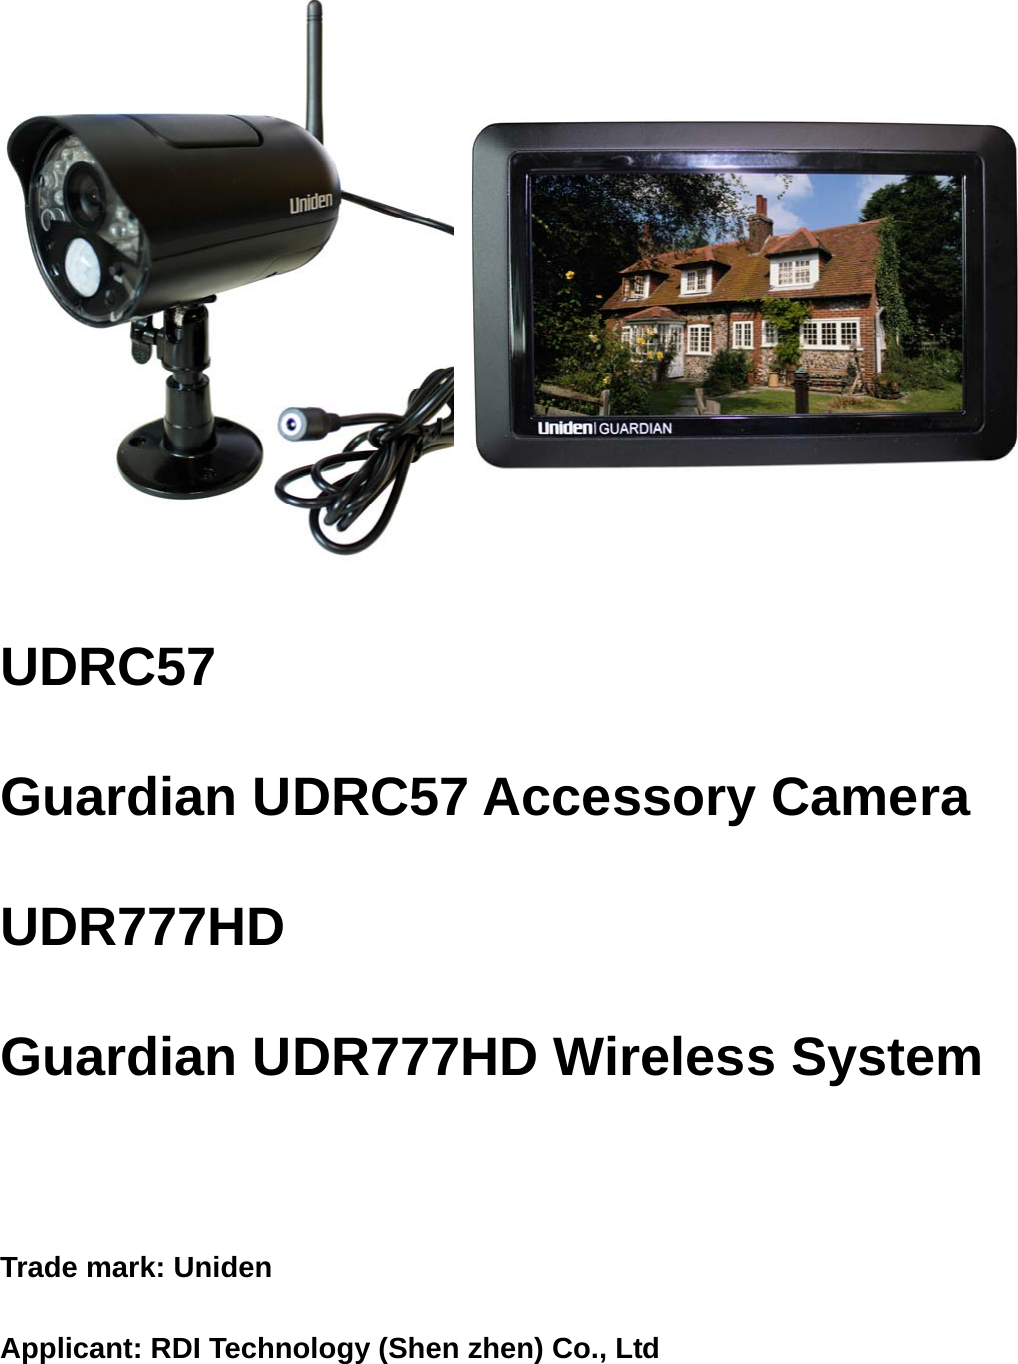   UDRC57 Guardian UDRC57 Accessory Camera UDR777HD Guardian UDR777HD Wireless System  Trade mark: Uniden Applicant: RDI Technology (Shen zhen) Co., Ltd 